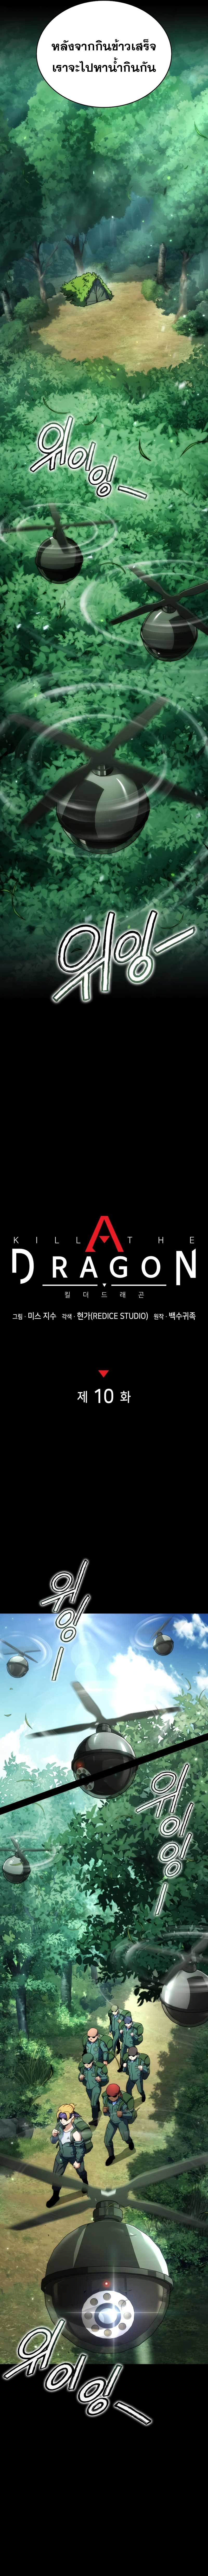 Kill the Dragon04